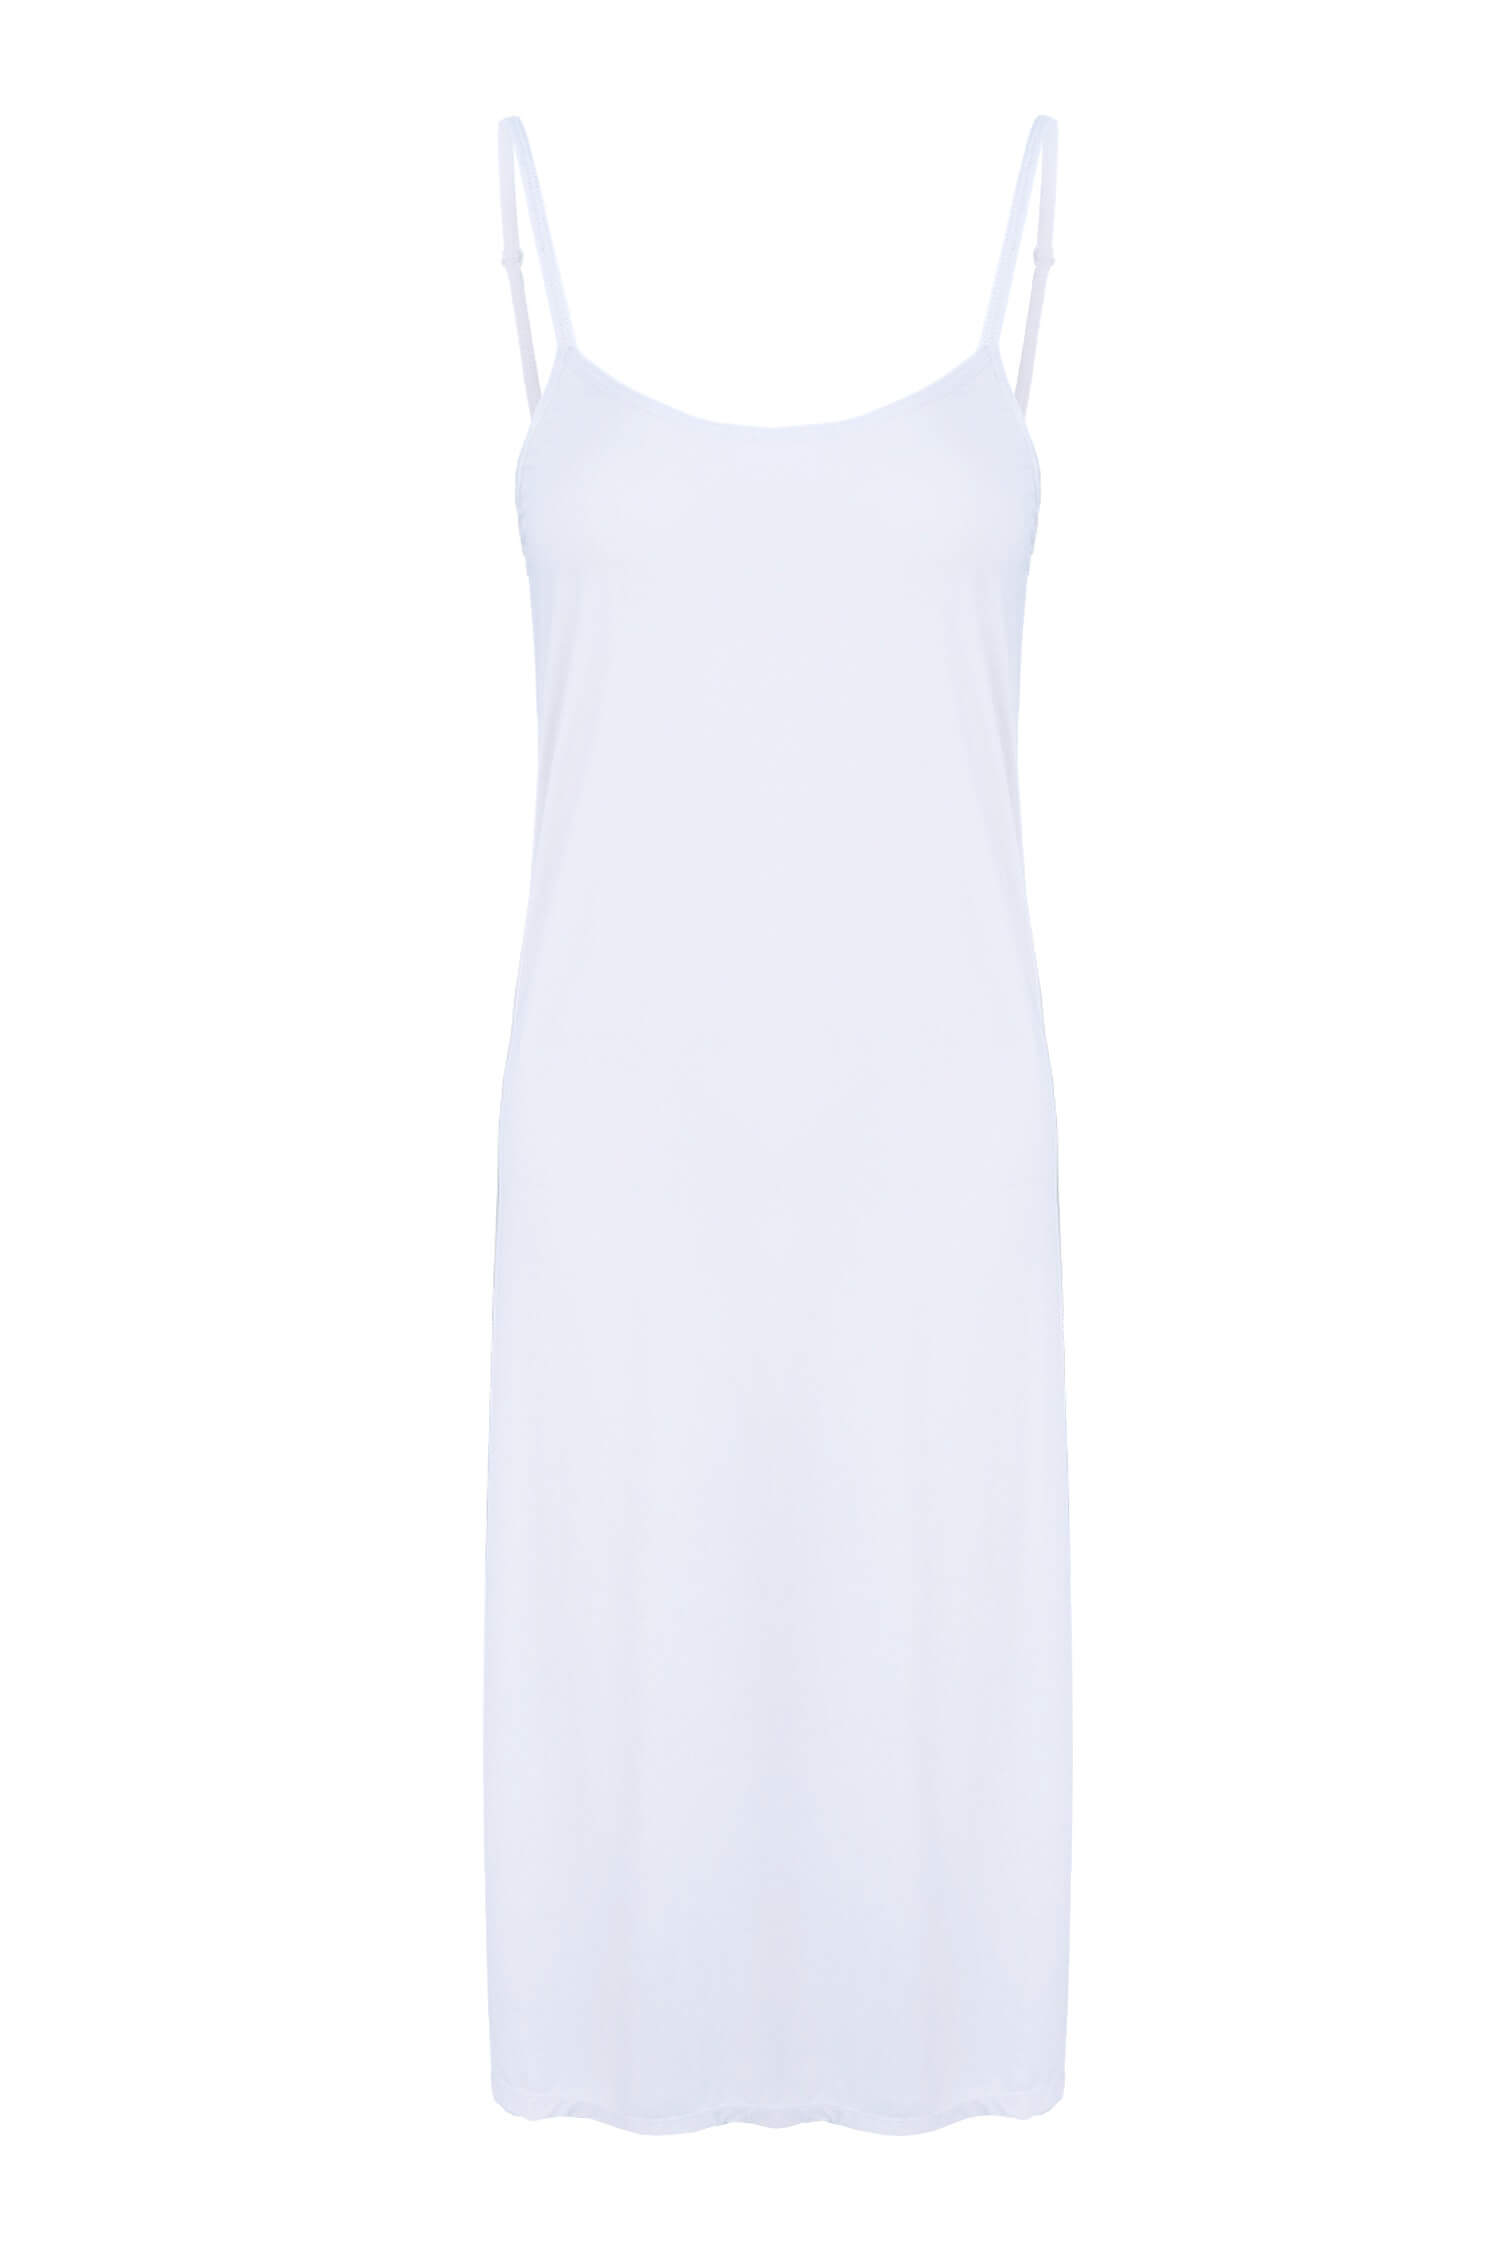 Gerta dlouhá spodnička pod šaty GBTW-713 XL bílá